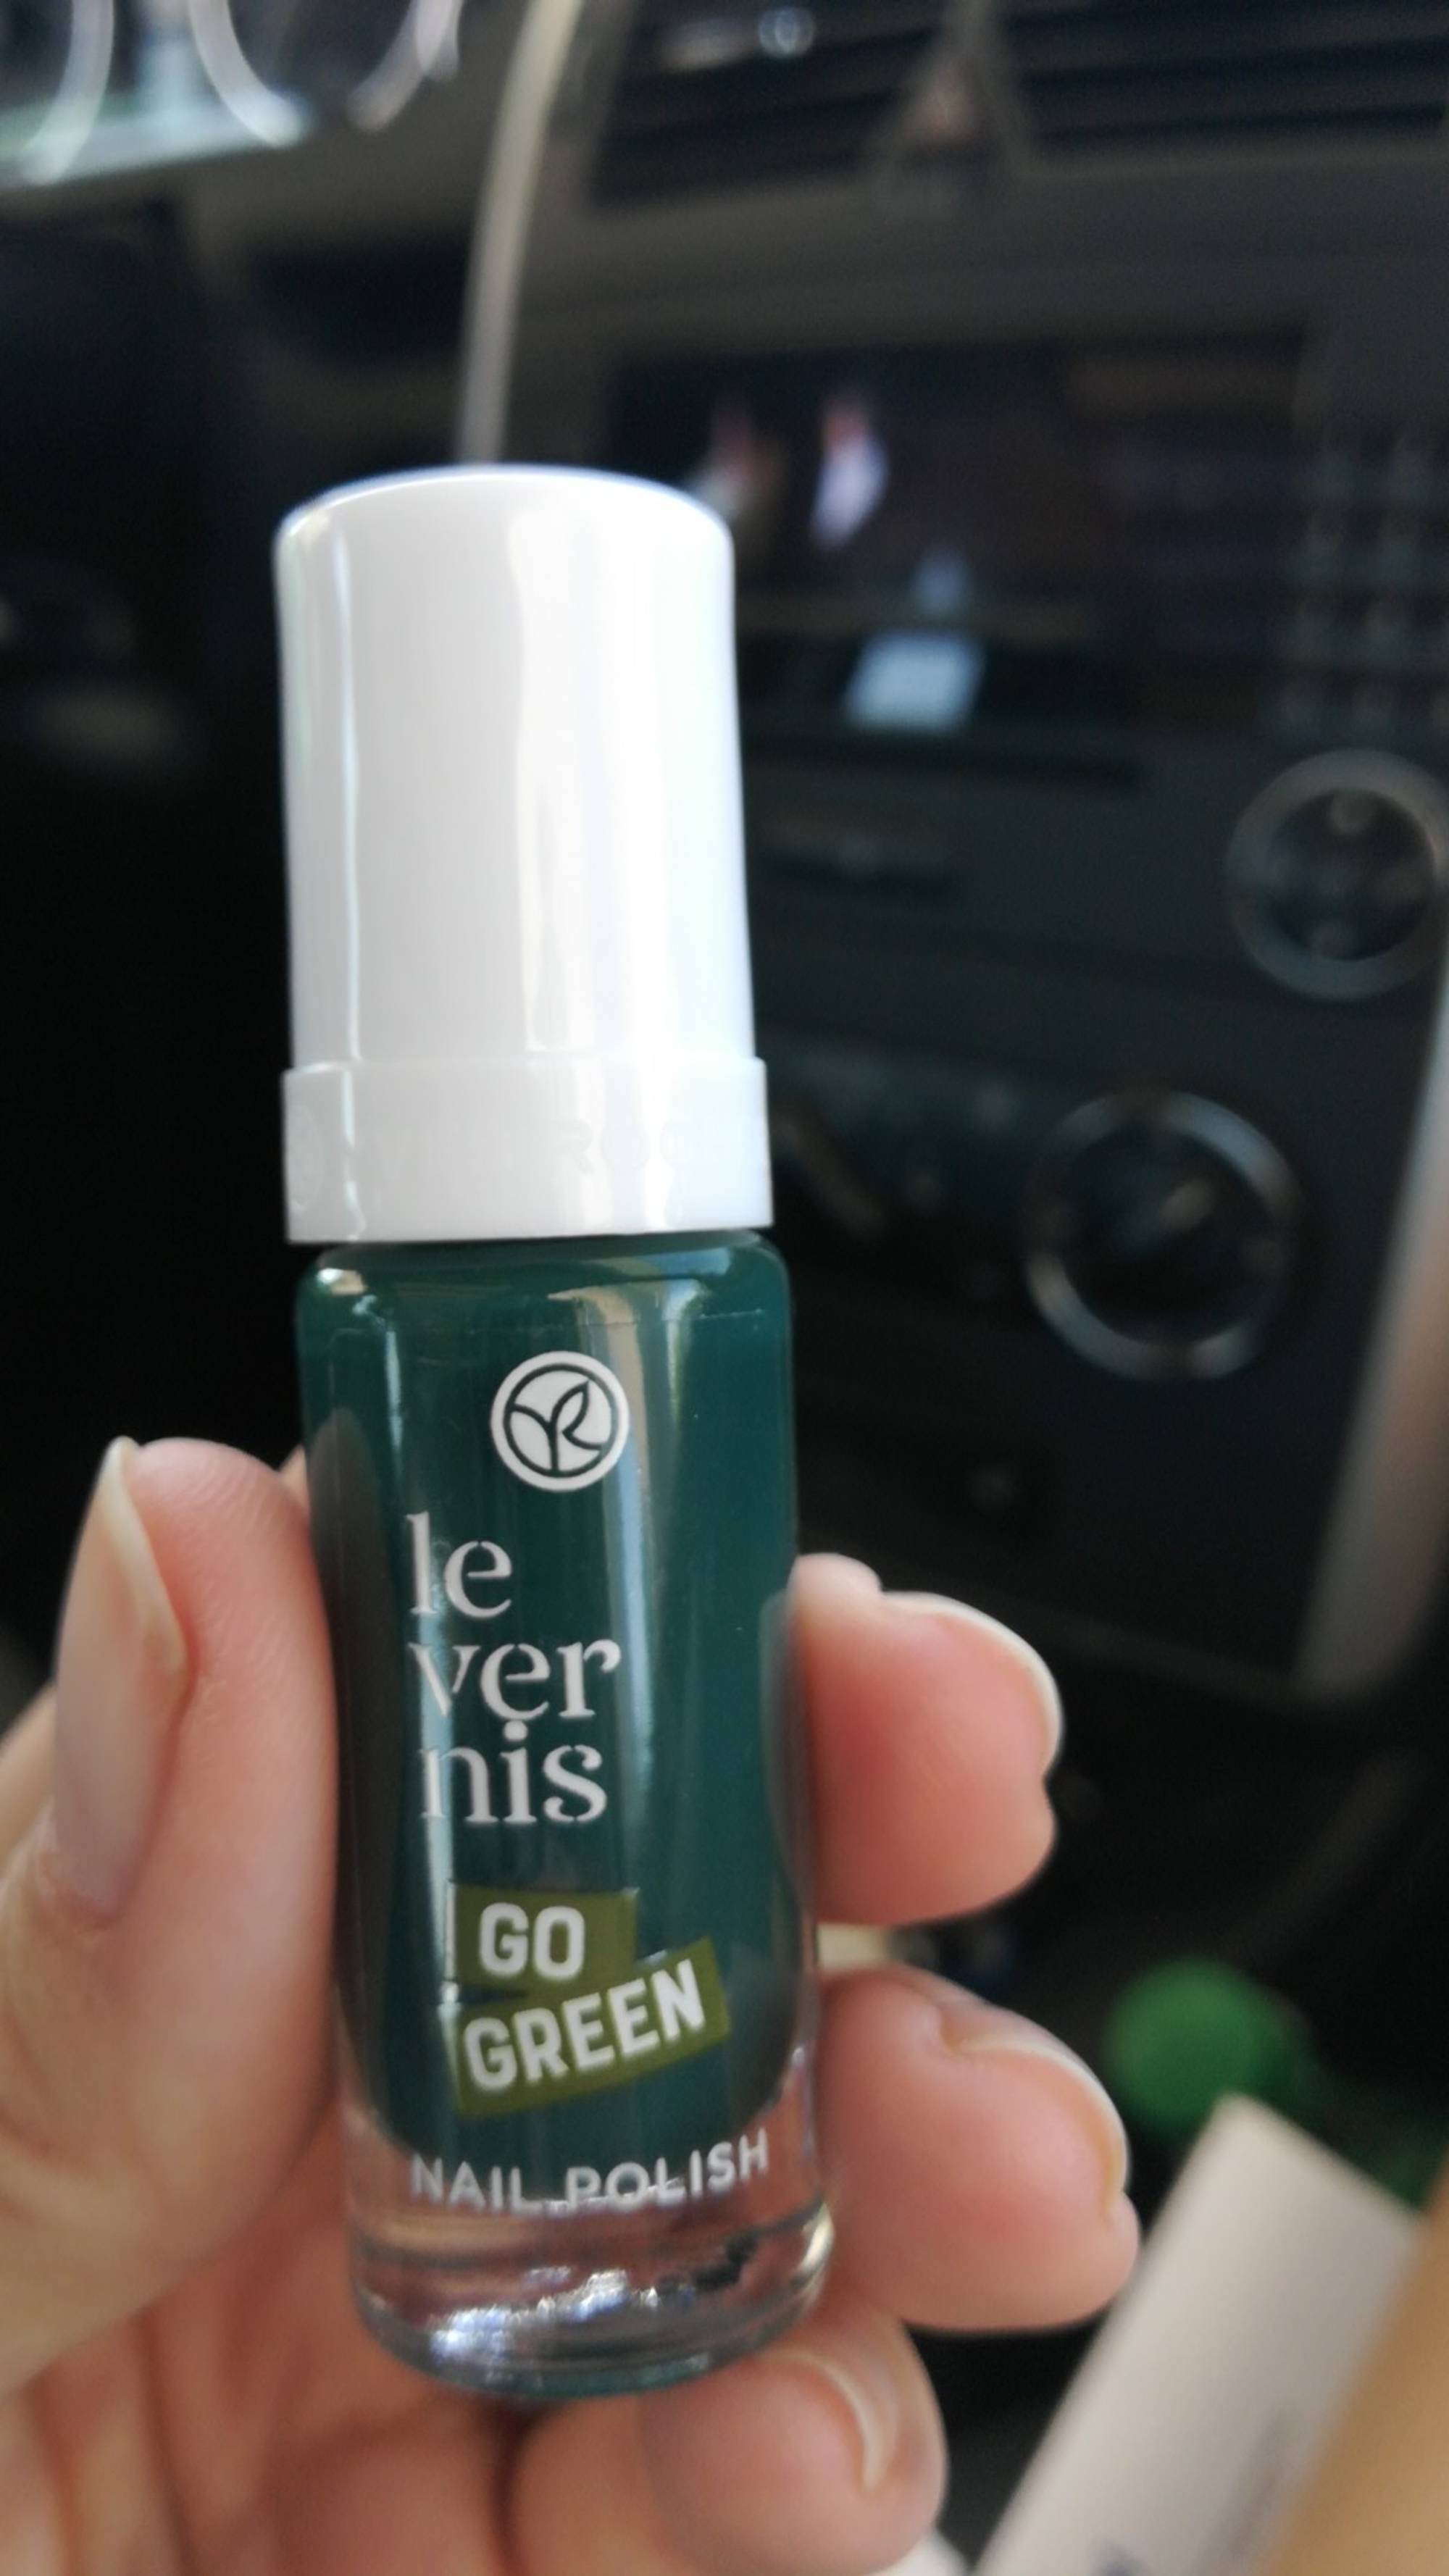 LE VERNIS - Go green - Nail polish